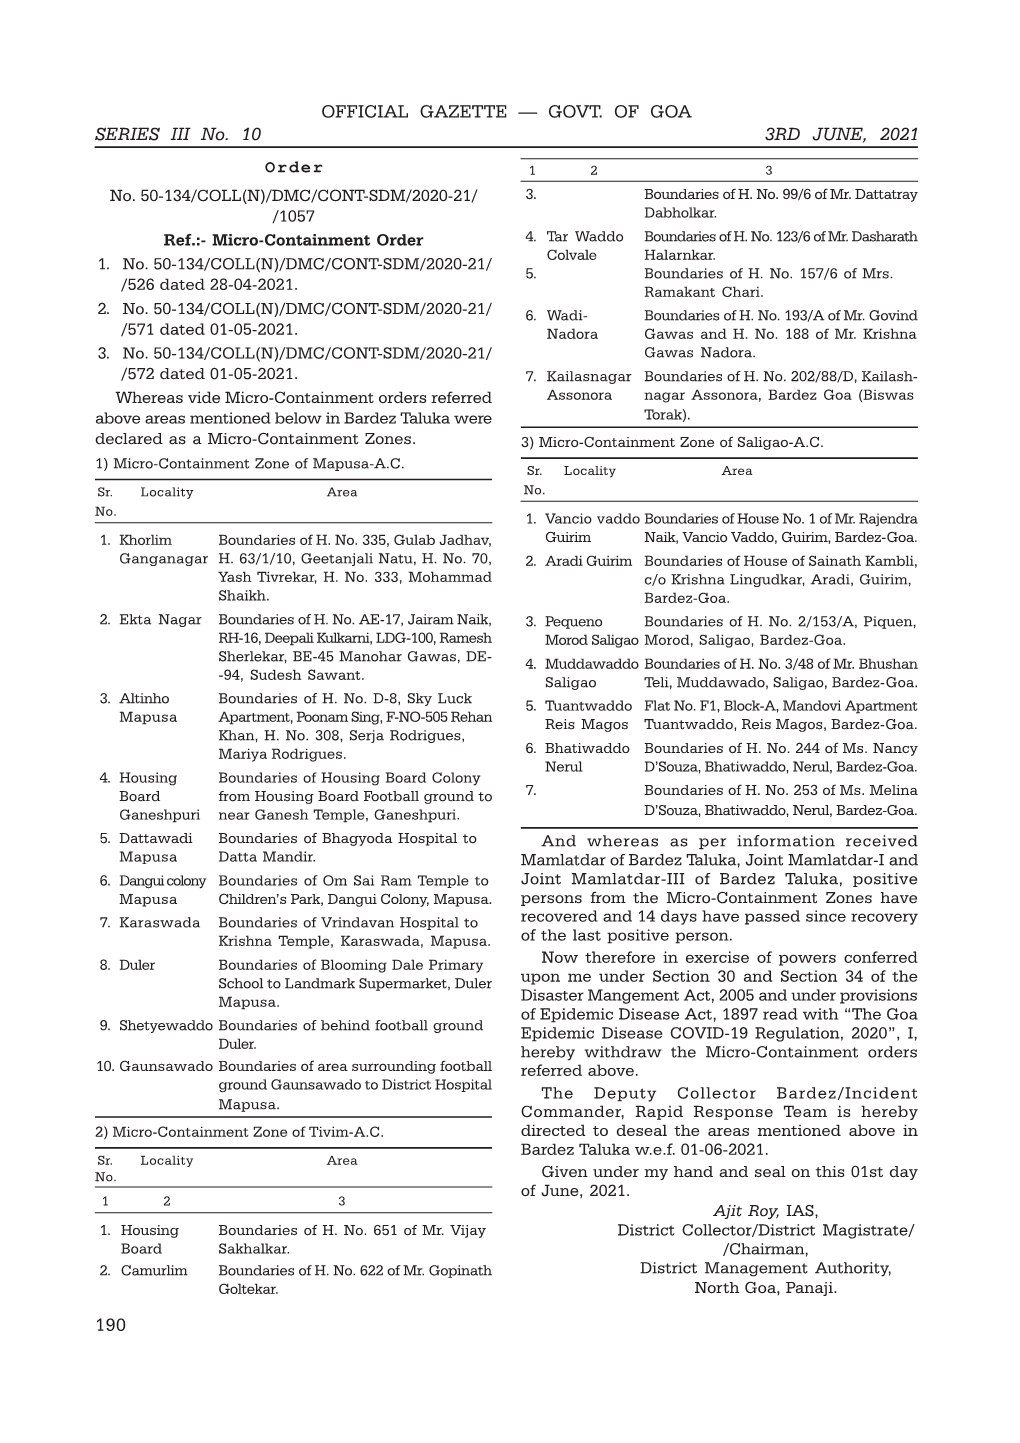 190 OFFICIAL GAZETTE — GOVT. of GOA SERIES III No. 10 3RD JUNE